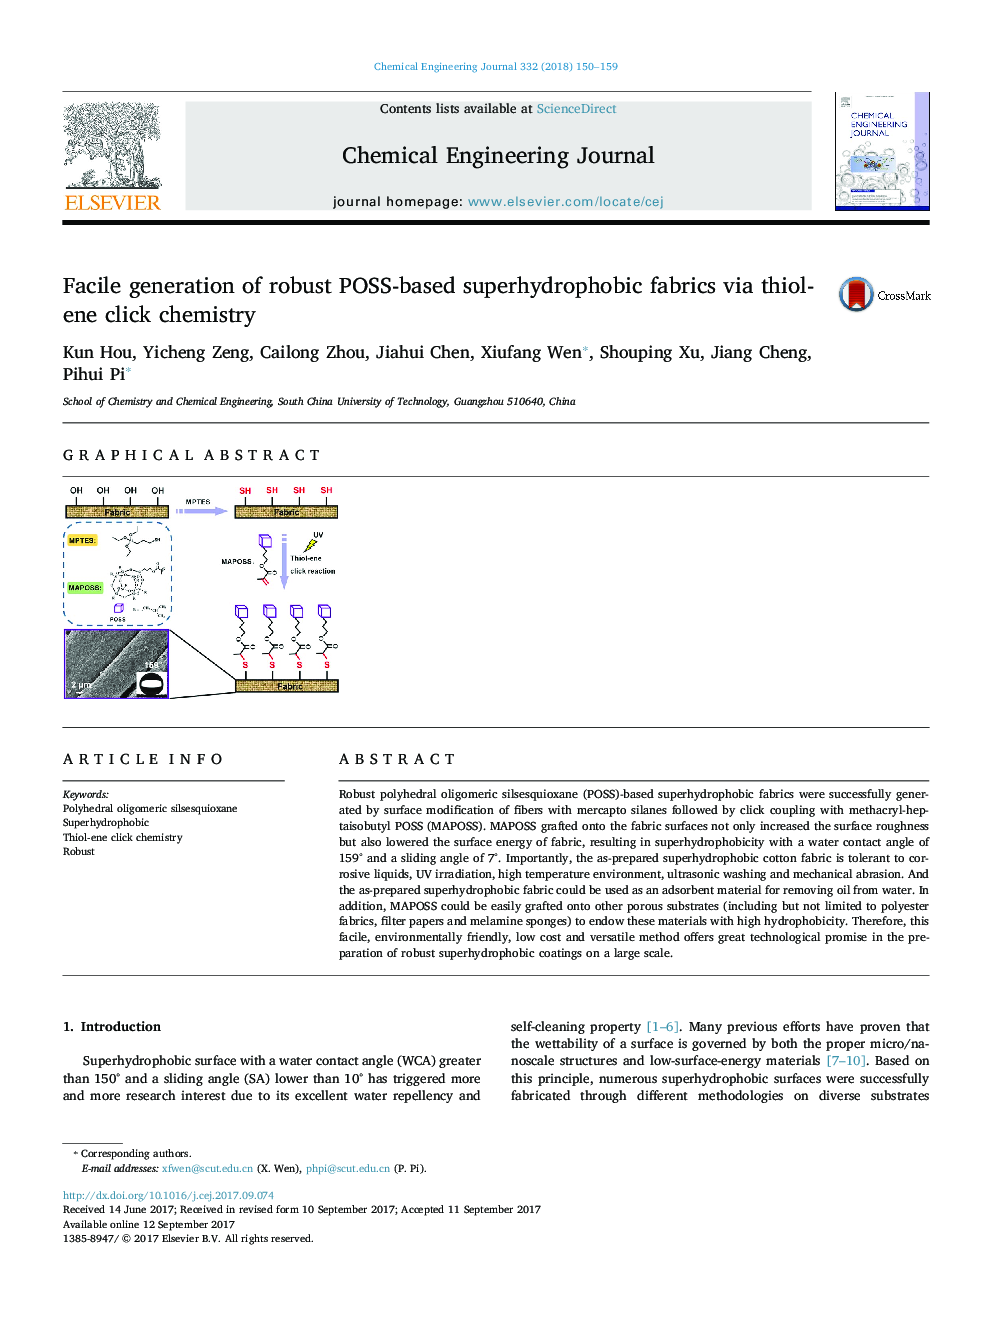 Facile generation of robust POSS-based superhydrophobic fabrics via thiol-ene click chemistry